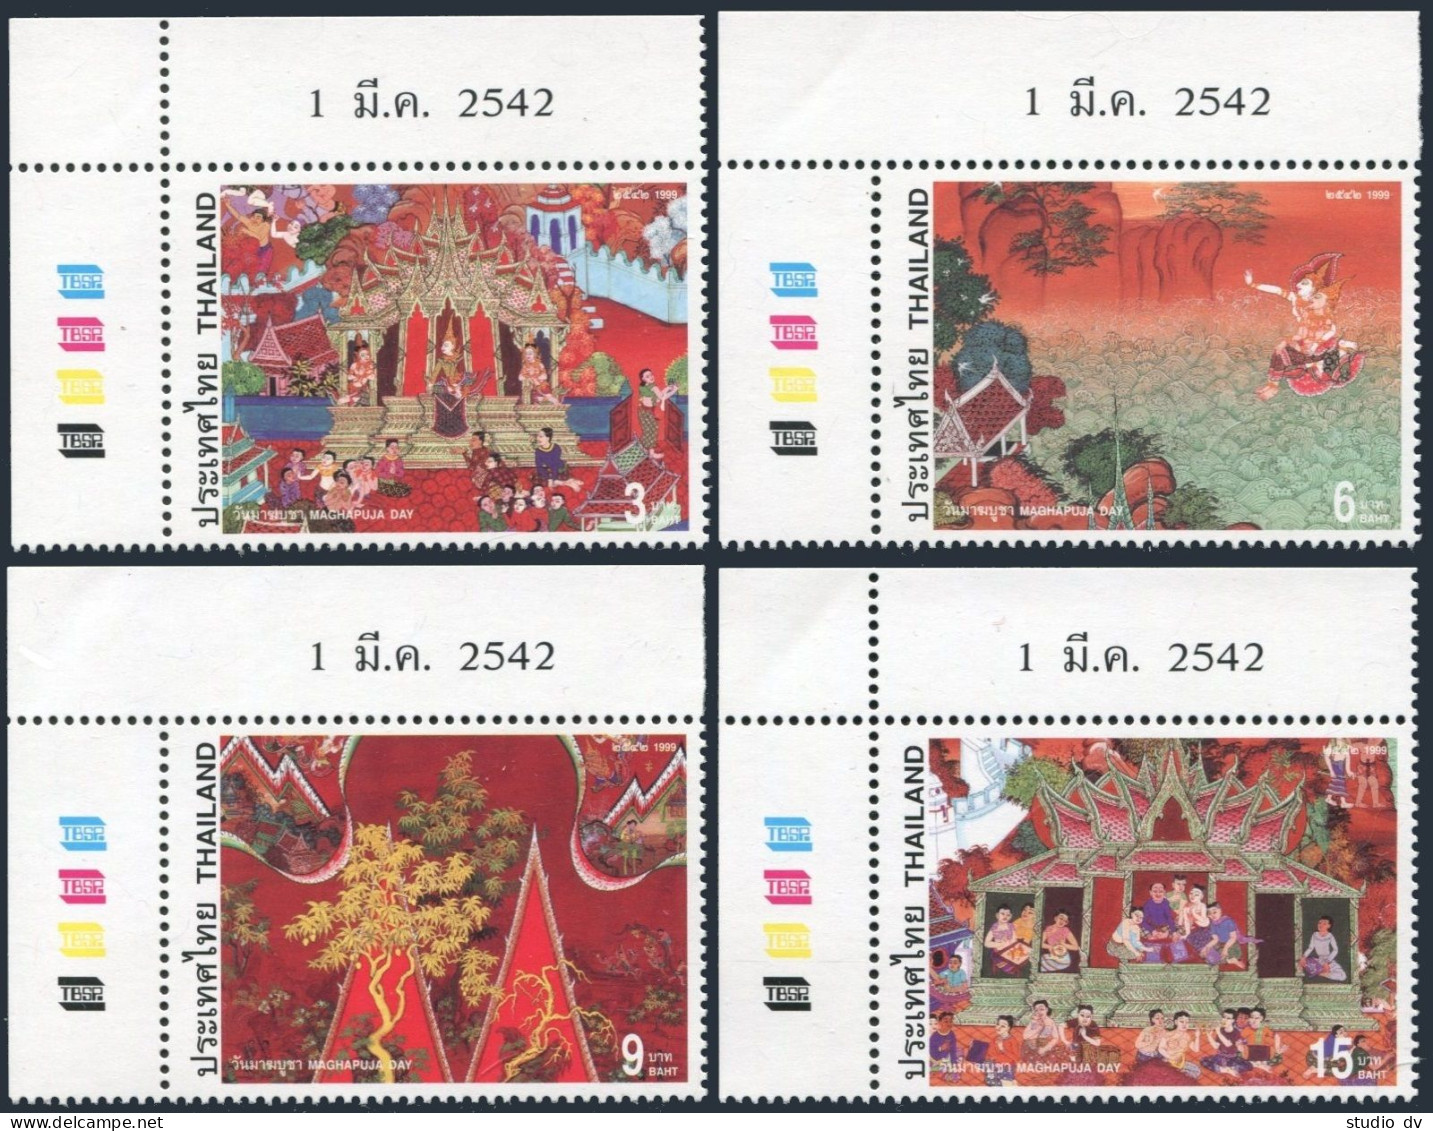 Thailand 1856-1859,1859a Sheet,MNH. Buddhist Holiday Maghapuja Day,1999. - Thaïlande